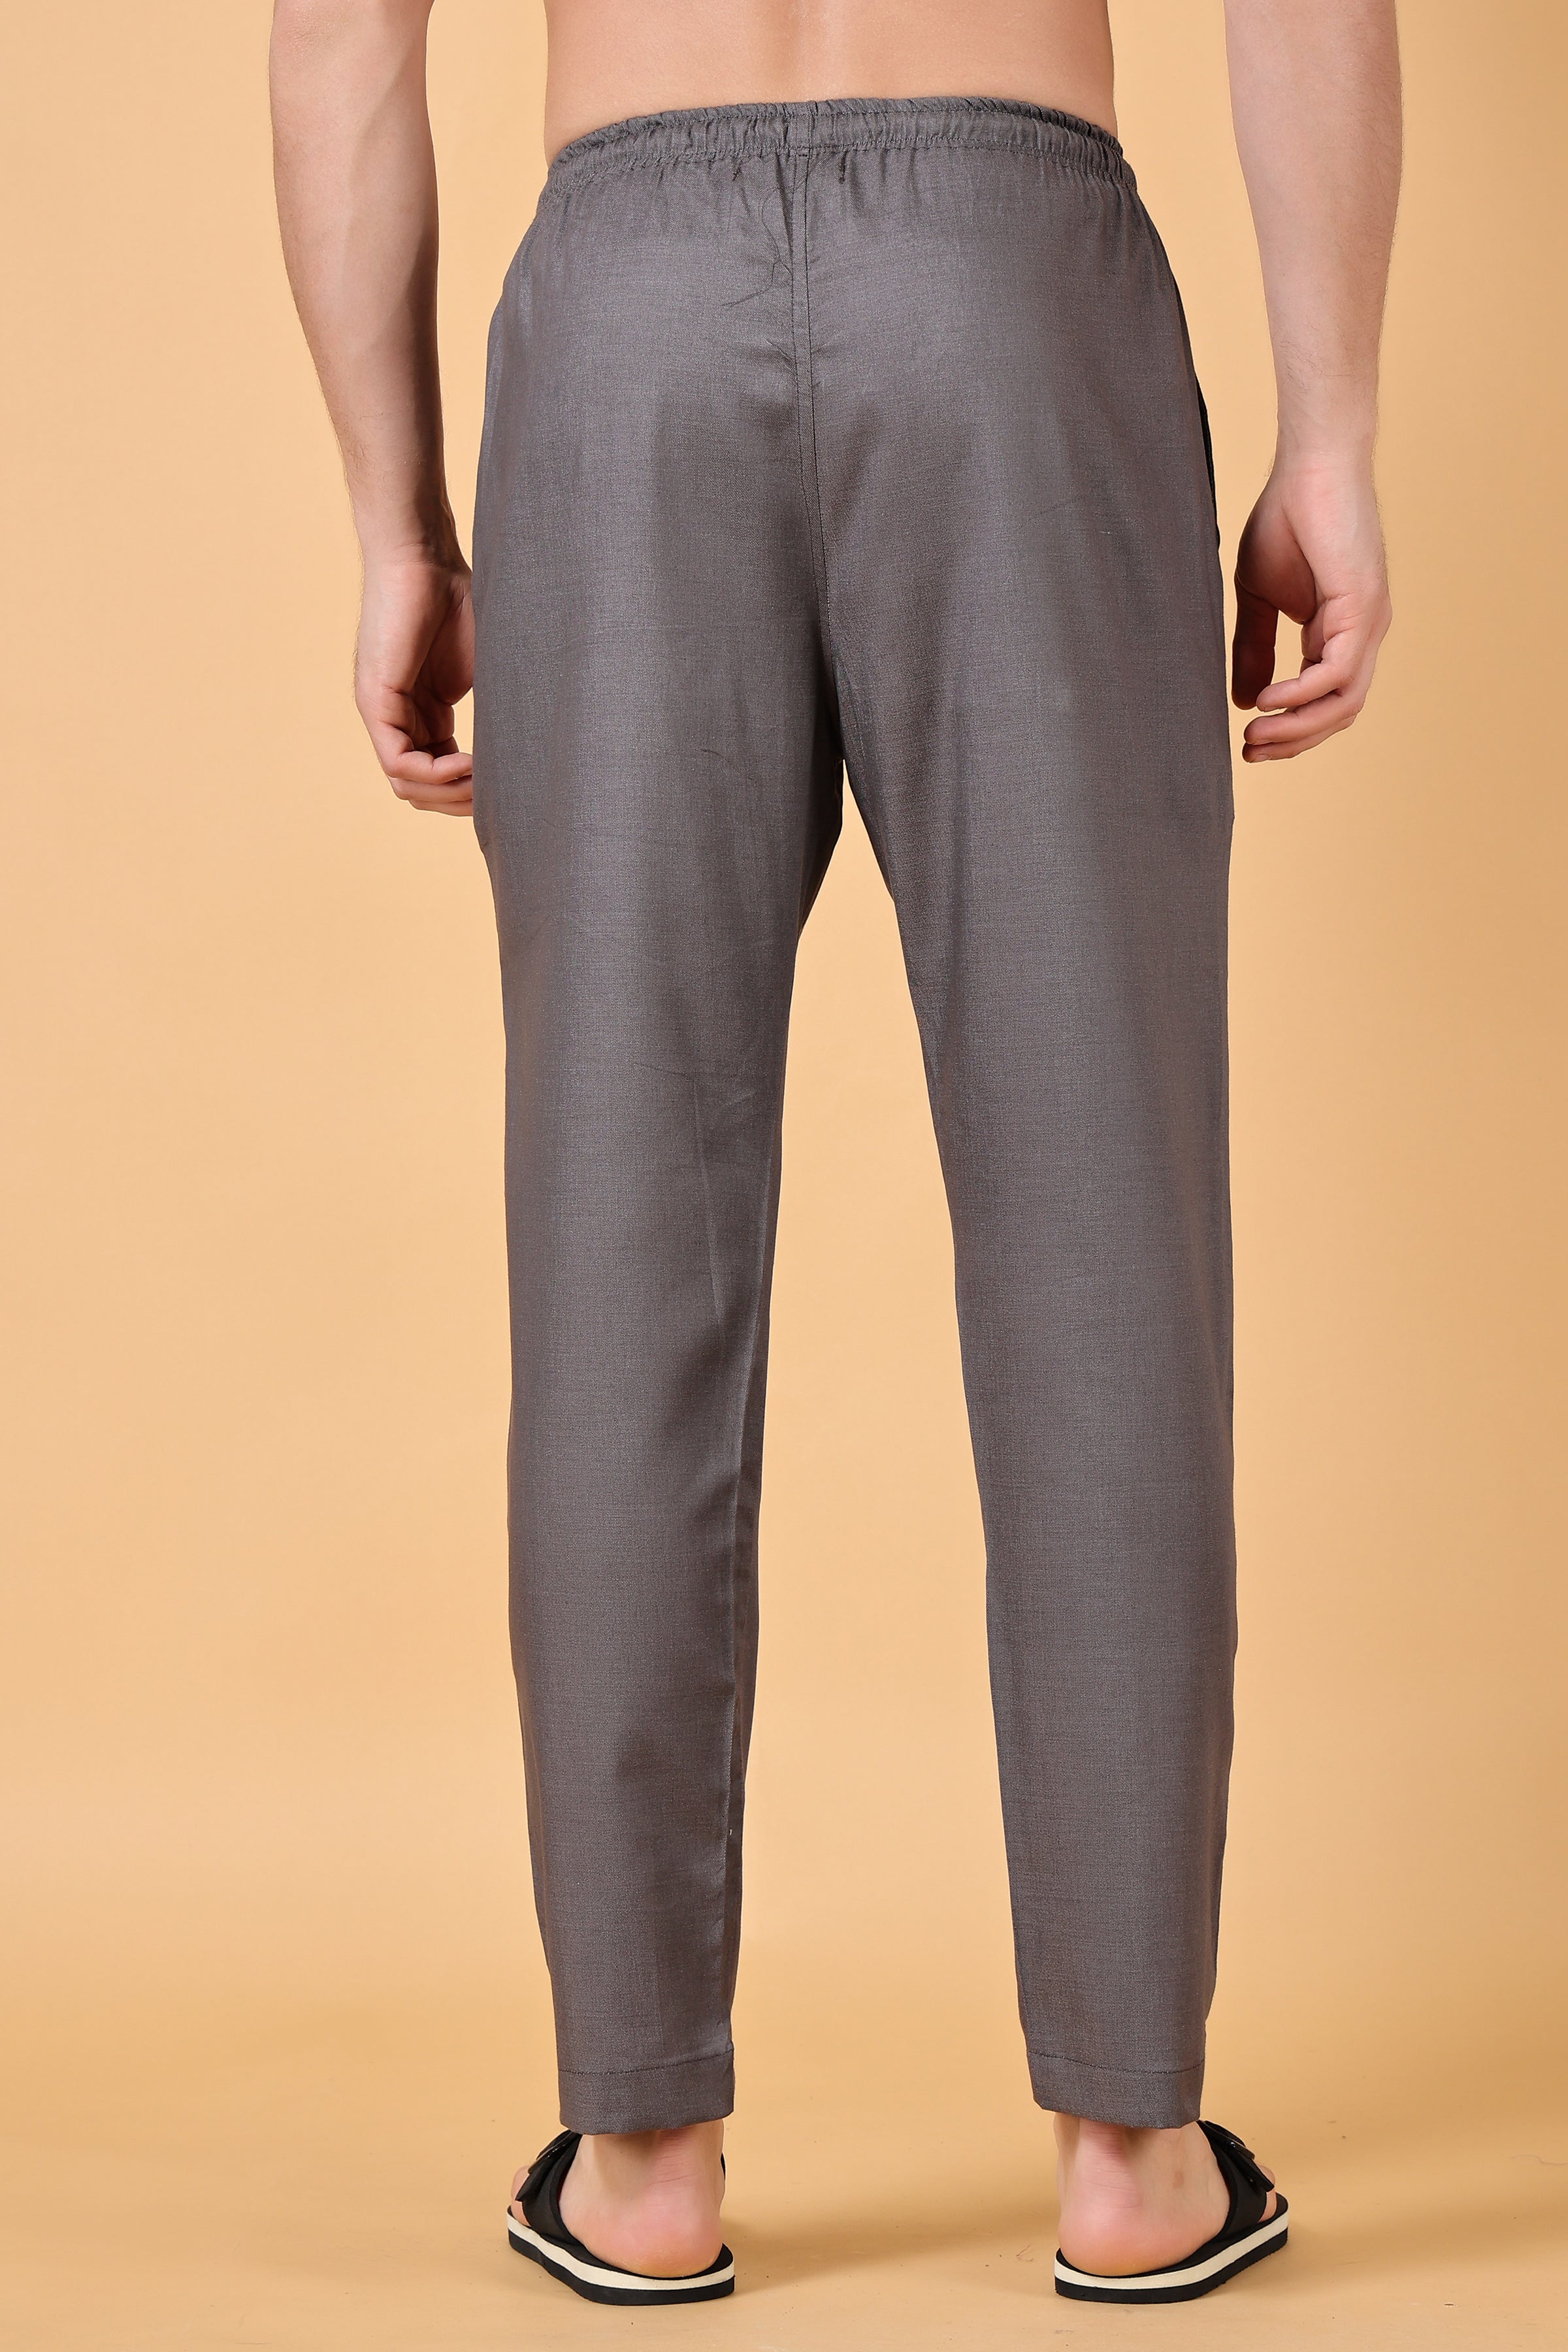 Woven Pajama Pants for Tall Men | American Tall